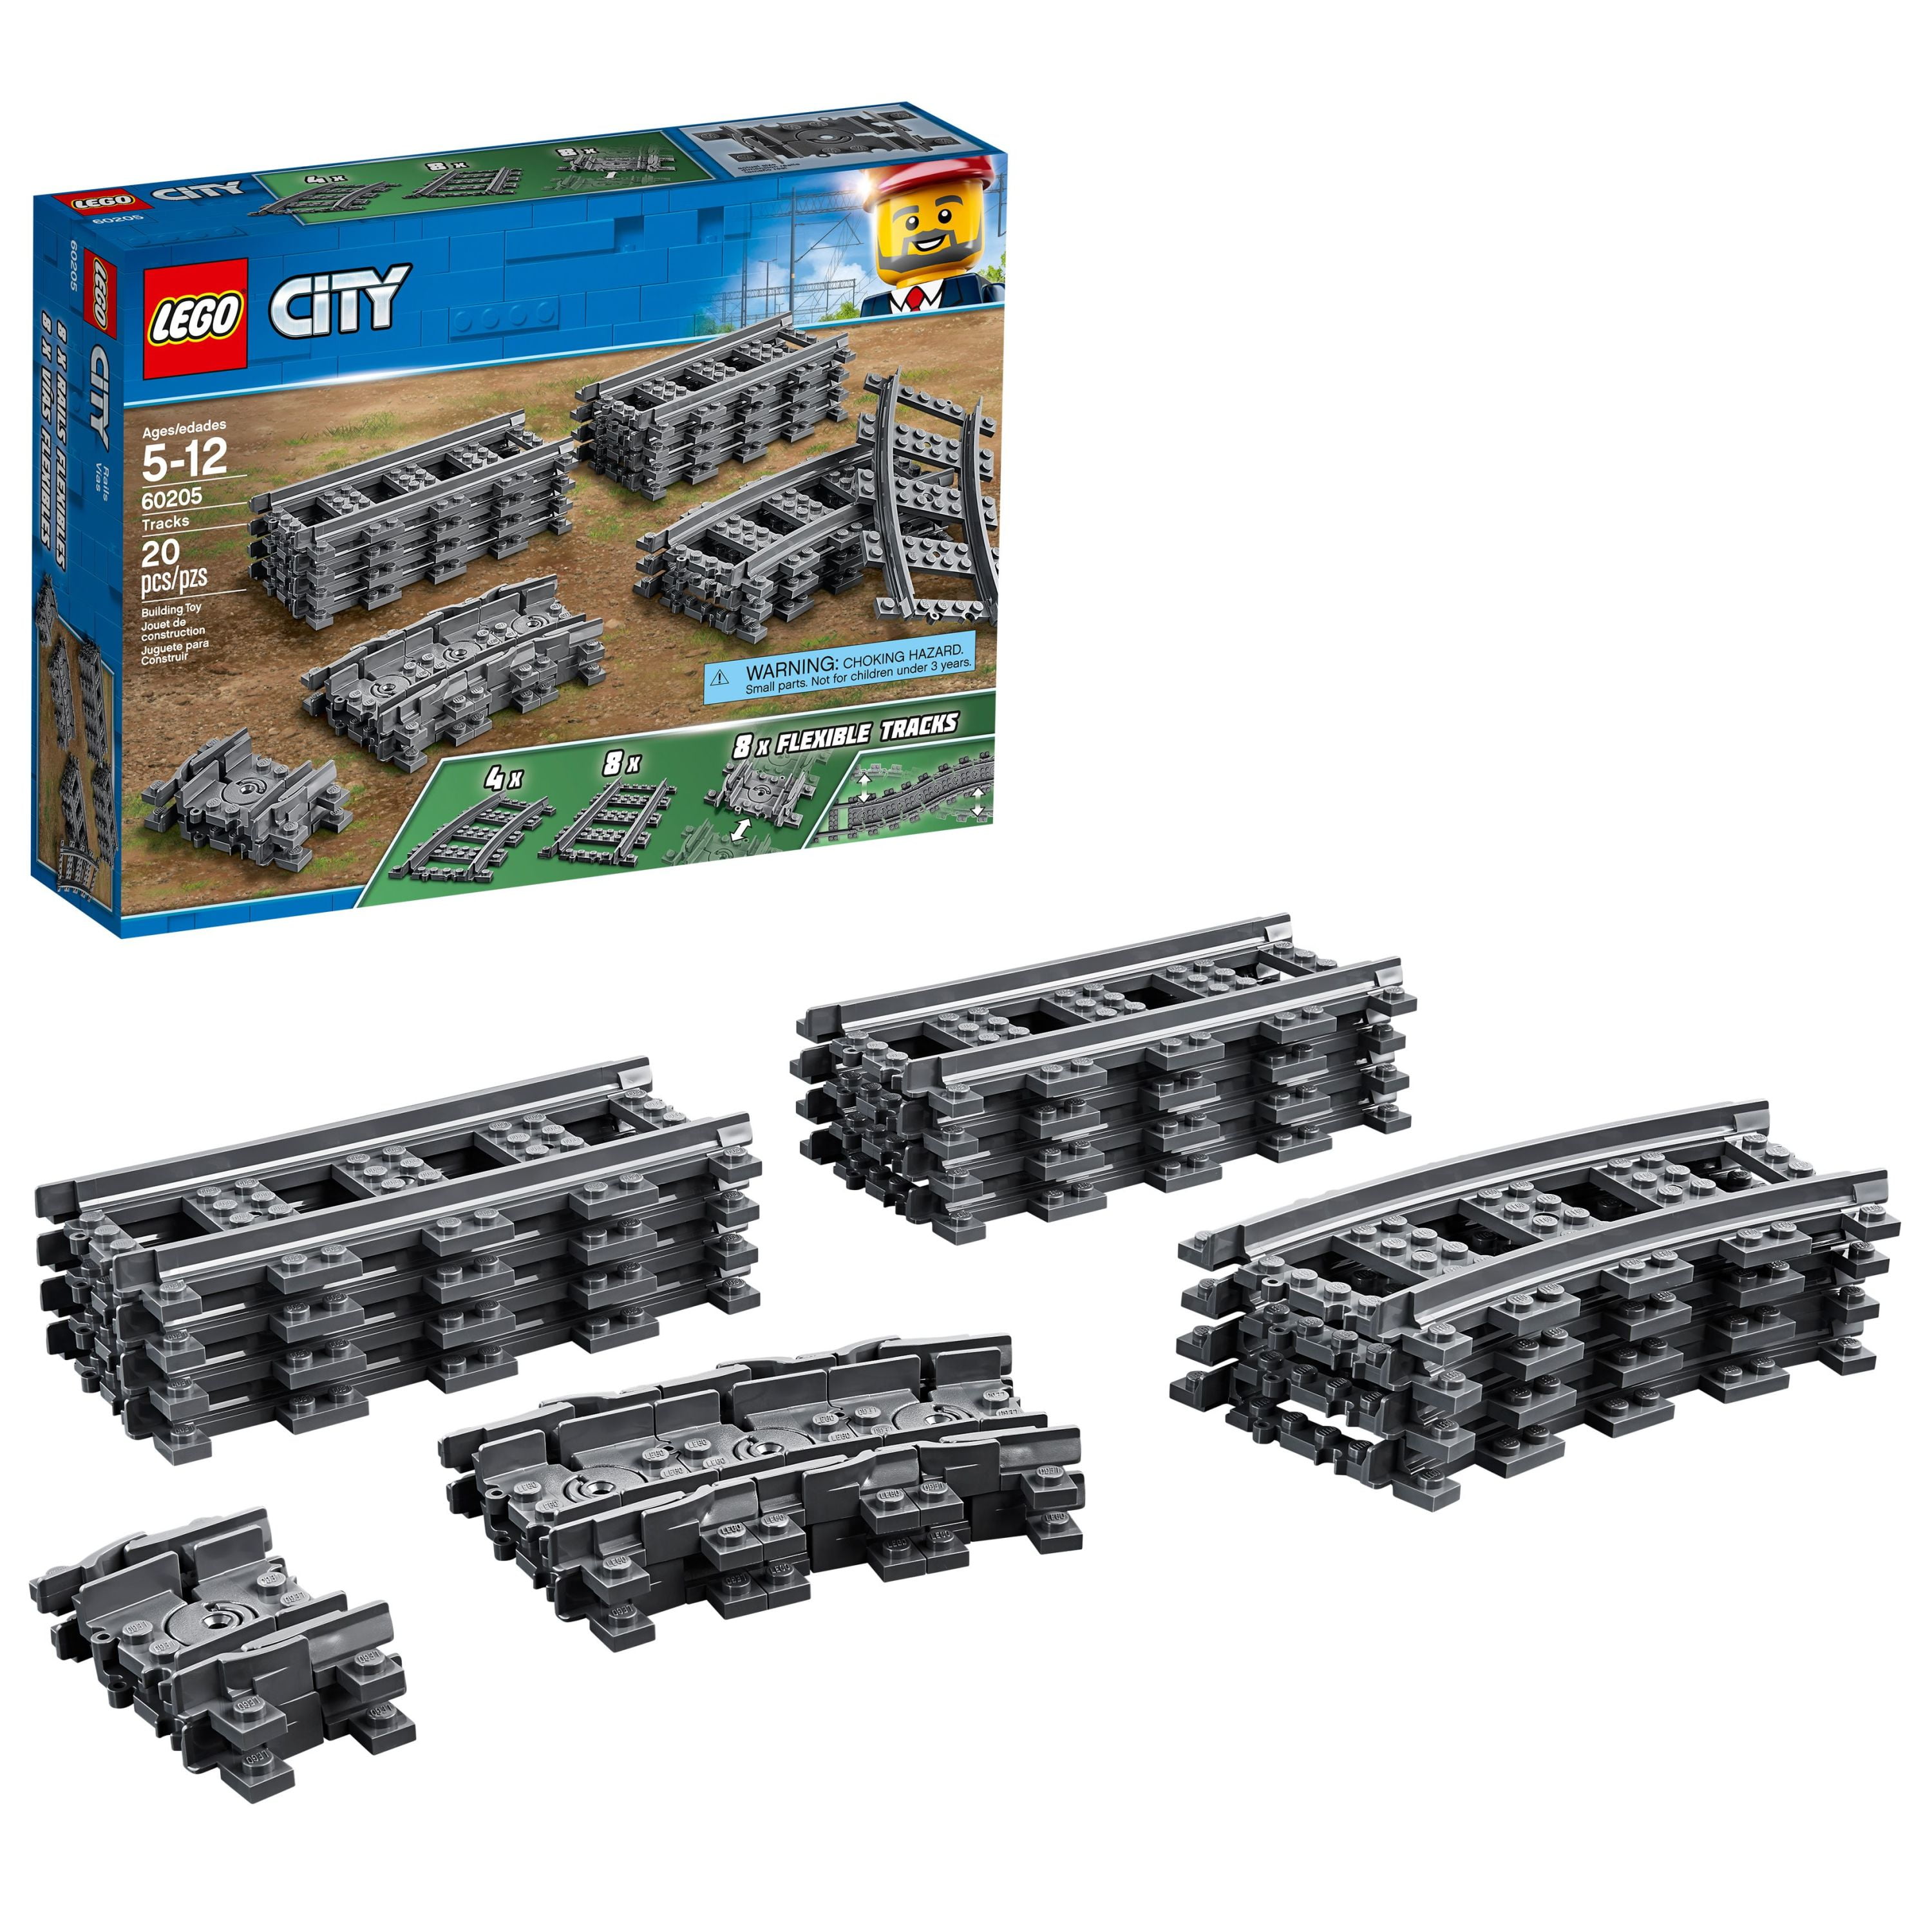 LEGO City Tracks 60205 - 20 Pieces Extension Accessory Set, Train